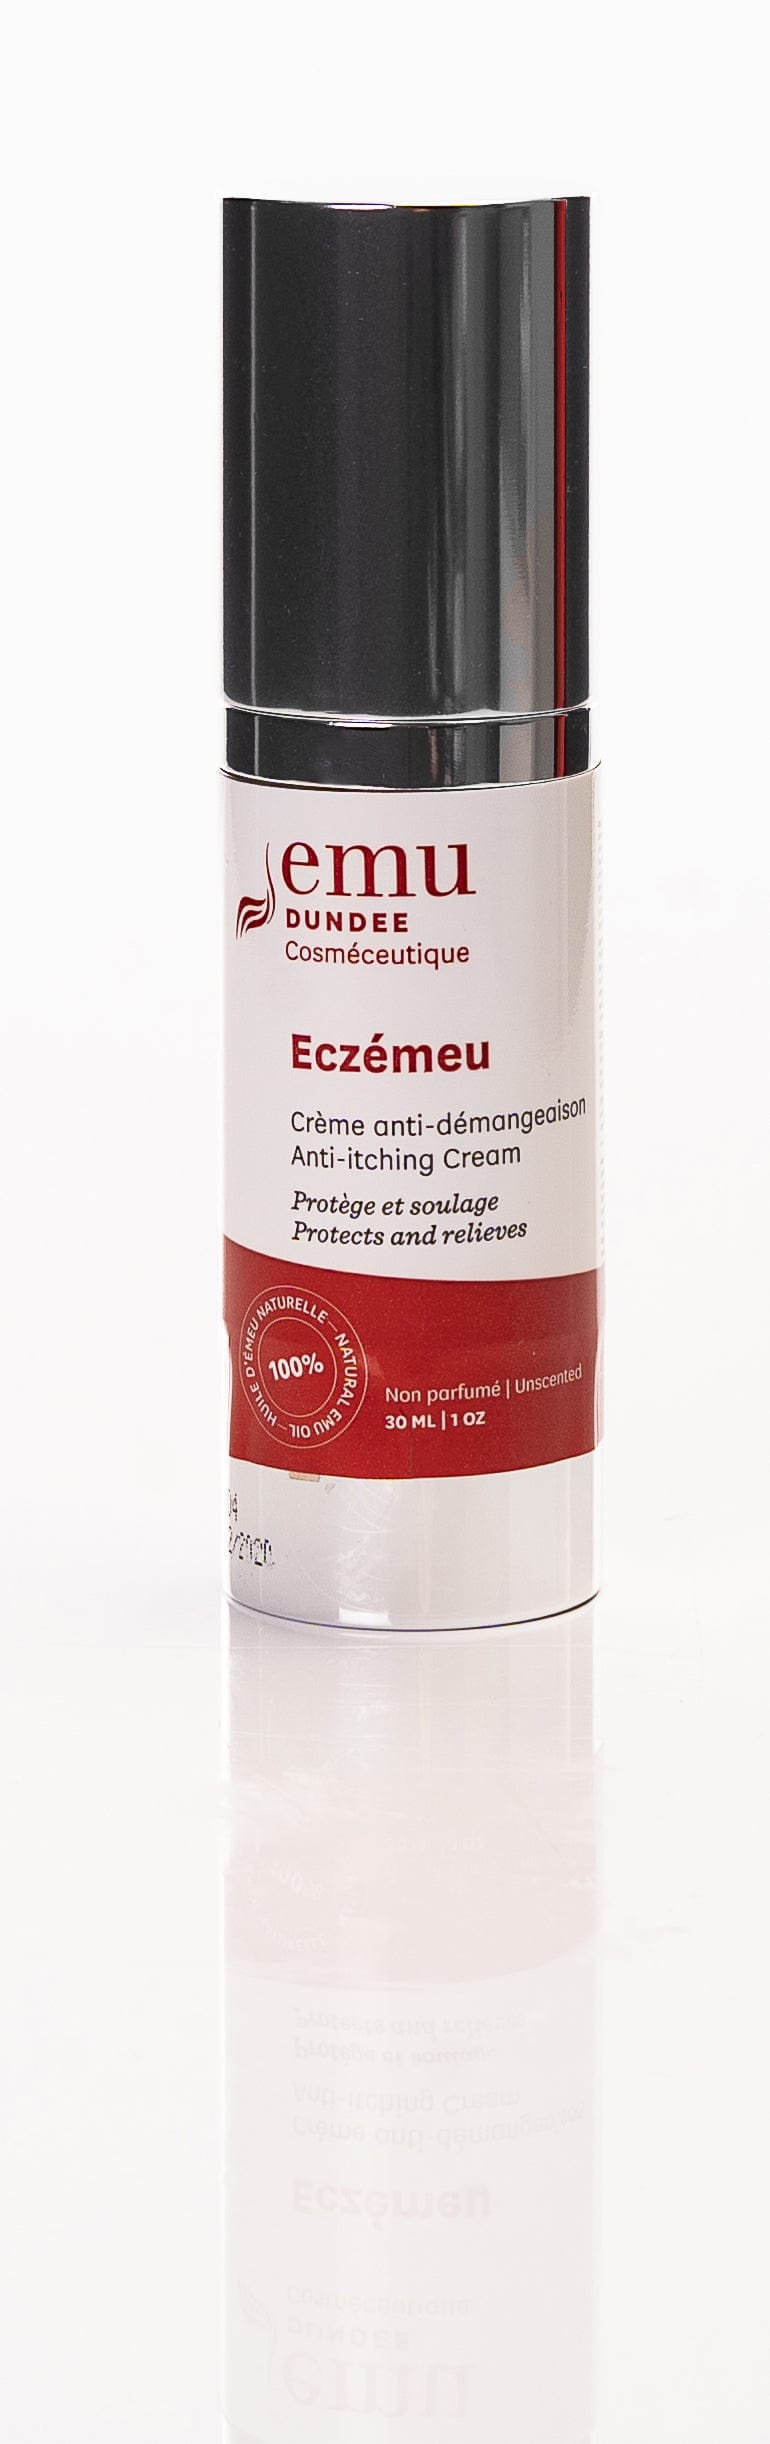 EMU DUNDEE Soins & beauté Eczemeu (crème anti-démangeaison) 30ml